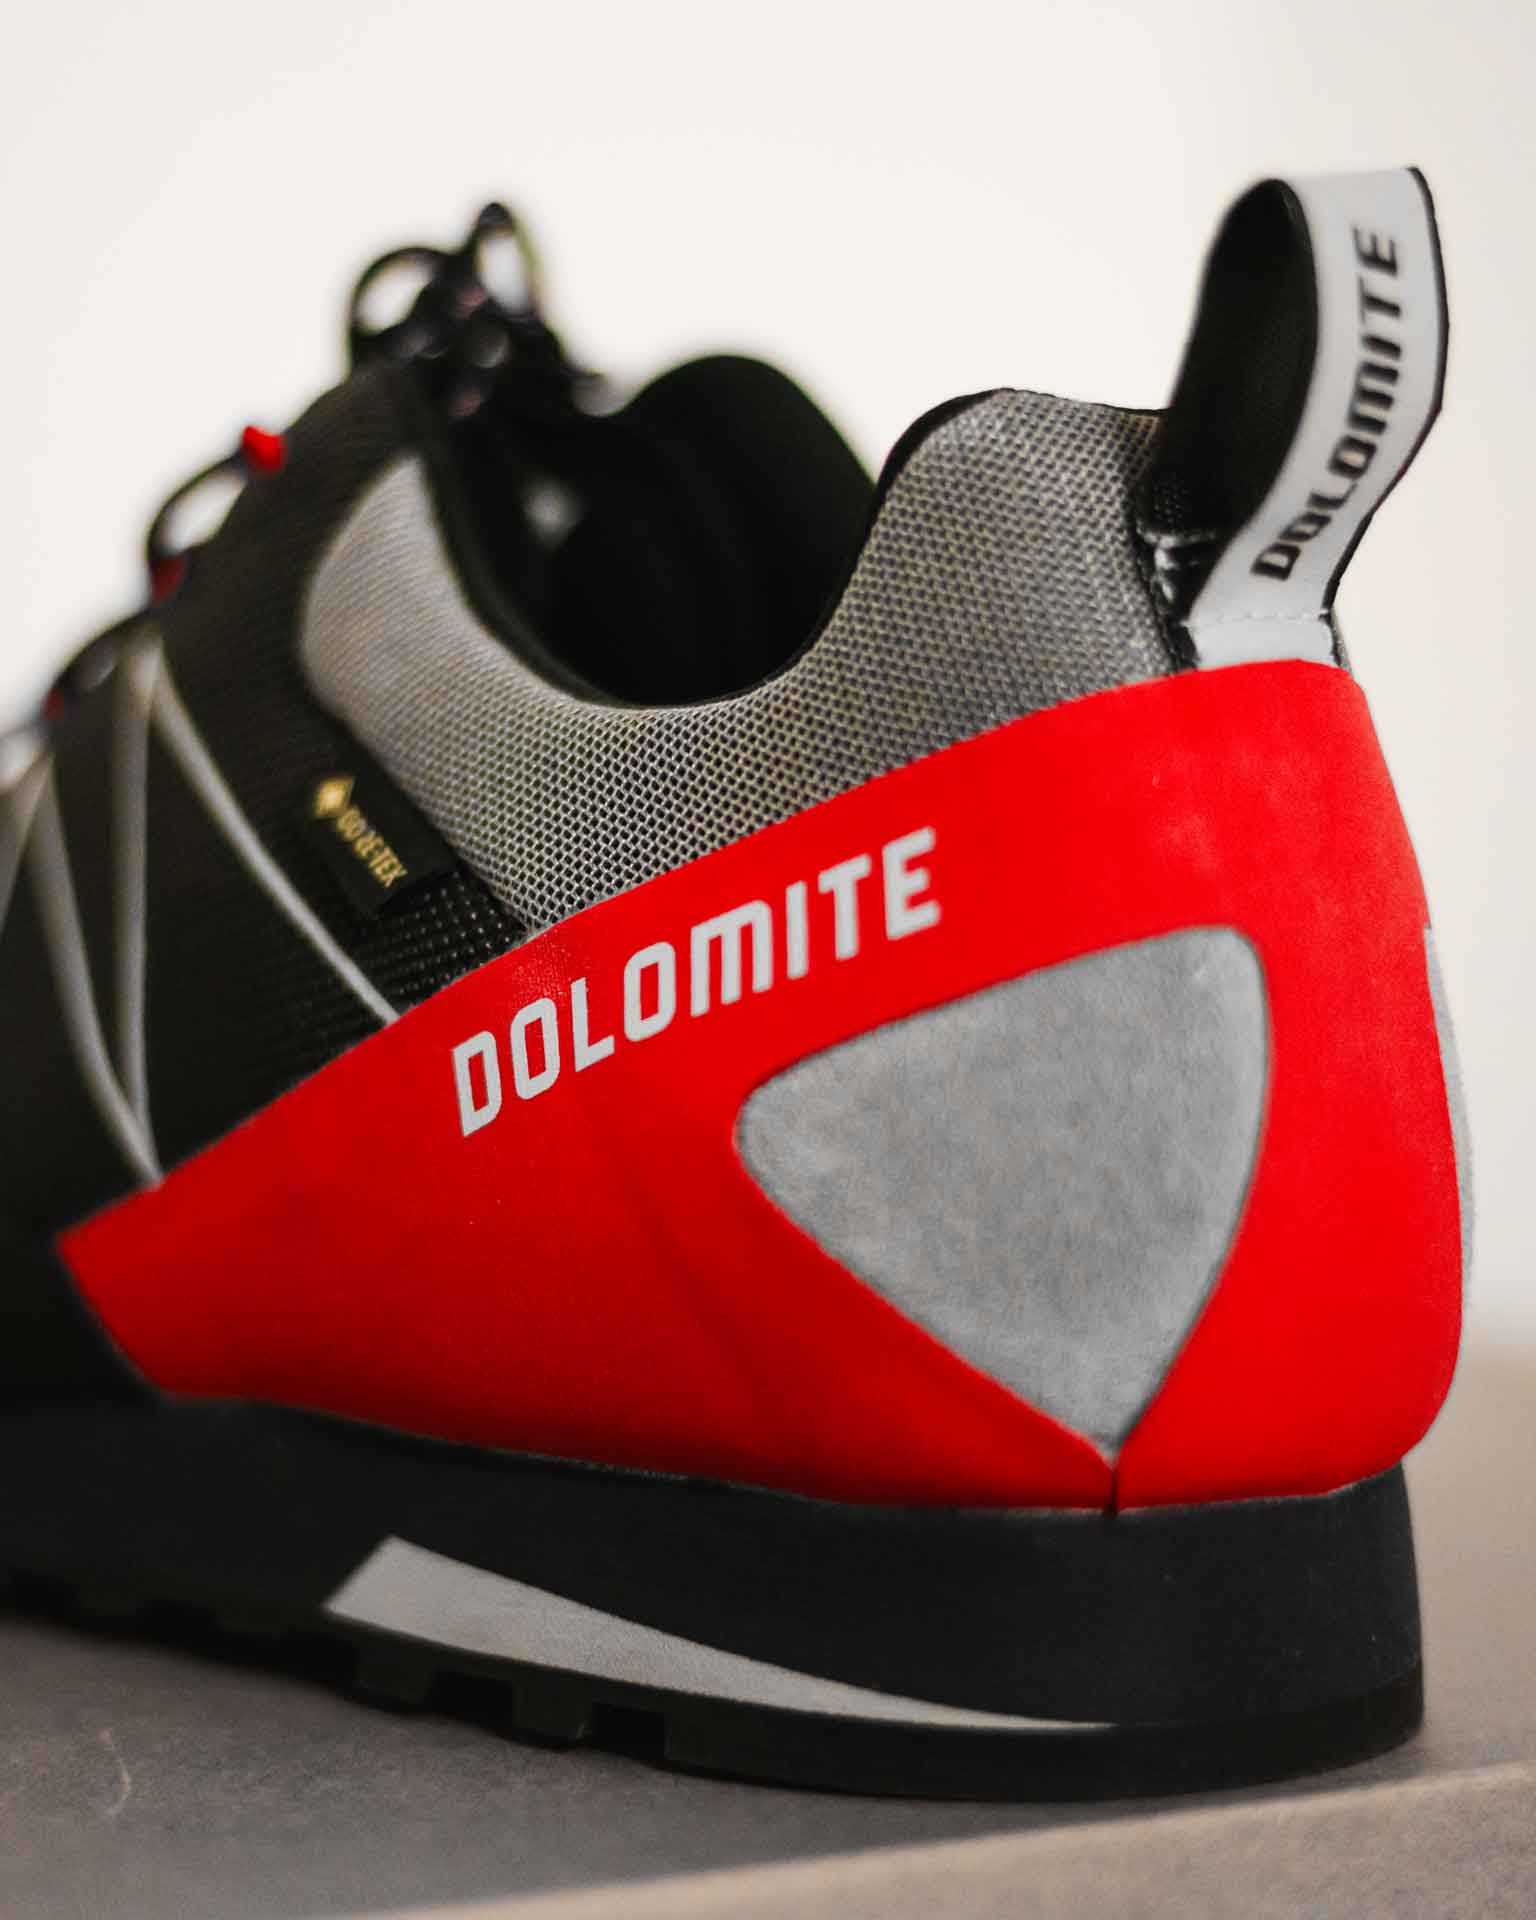 Dolomite Crodarossa Lite GTX 2.0 shoes